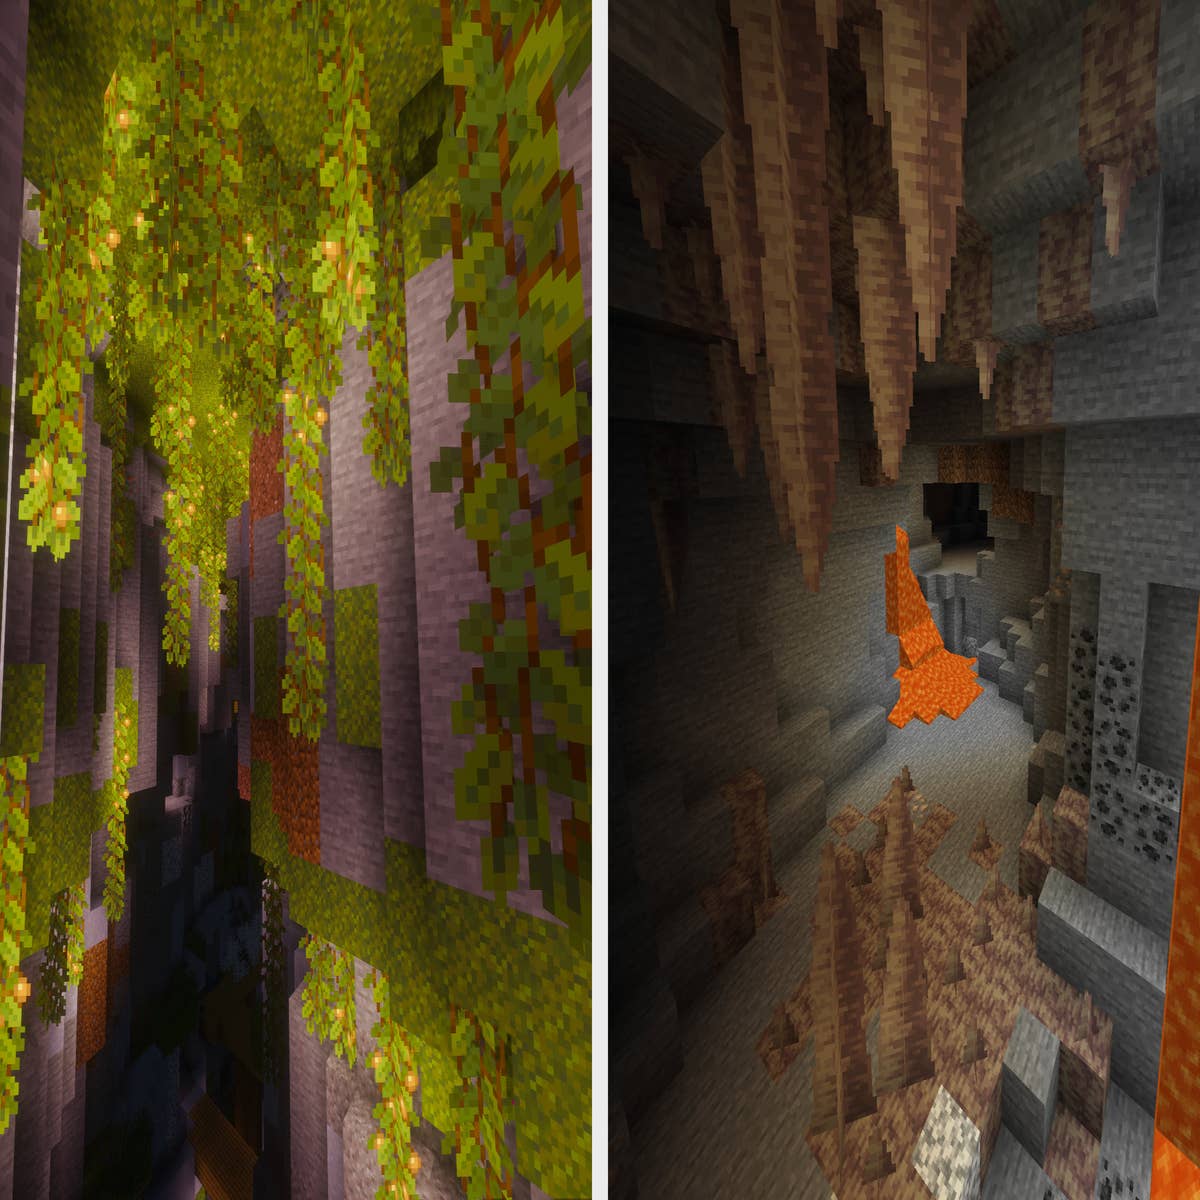 Minecraft 1.18 Texture Packs for Caves & Cliffs Update: Part 2